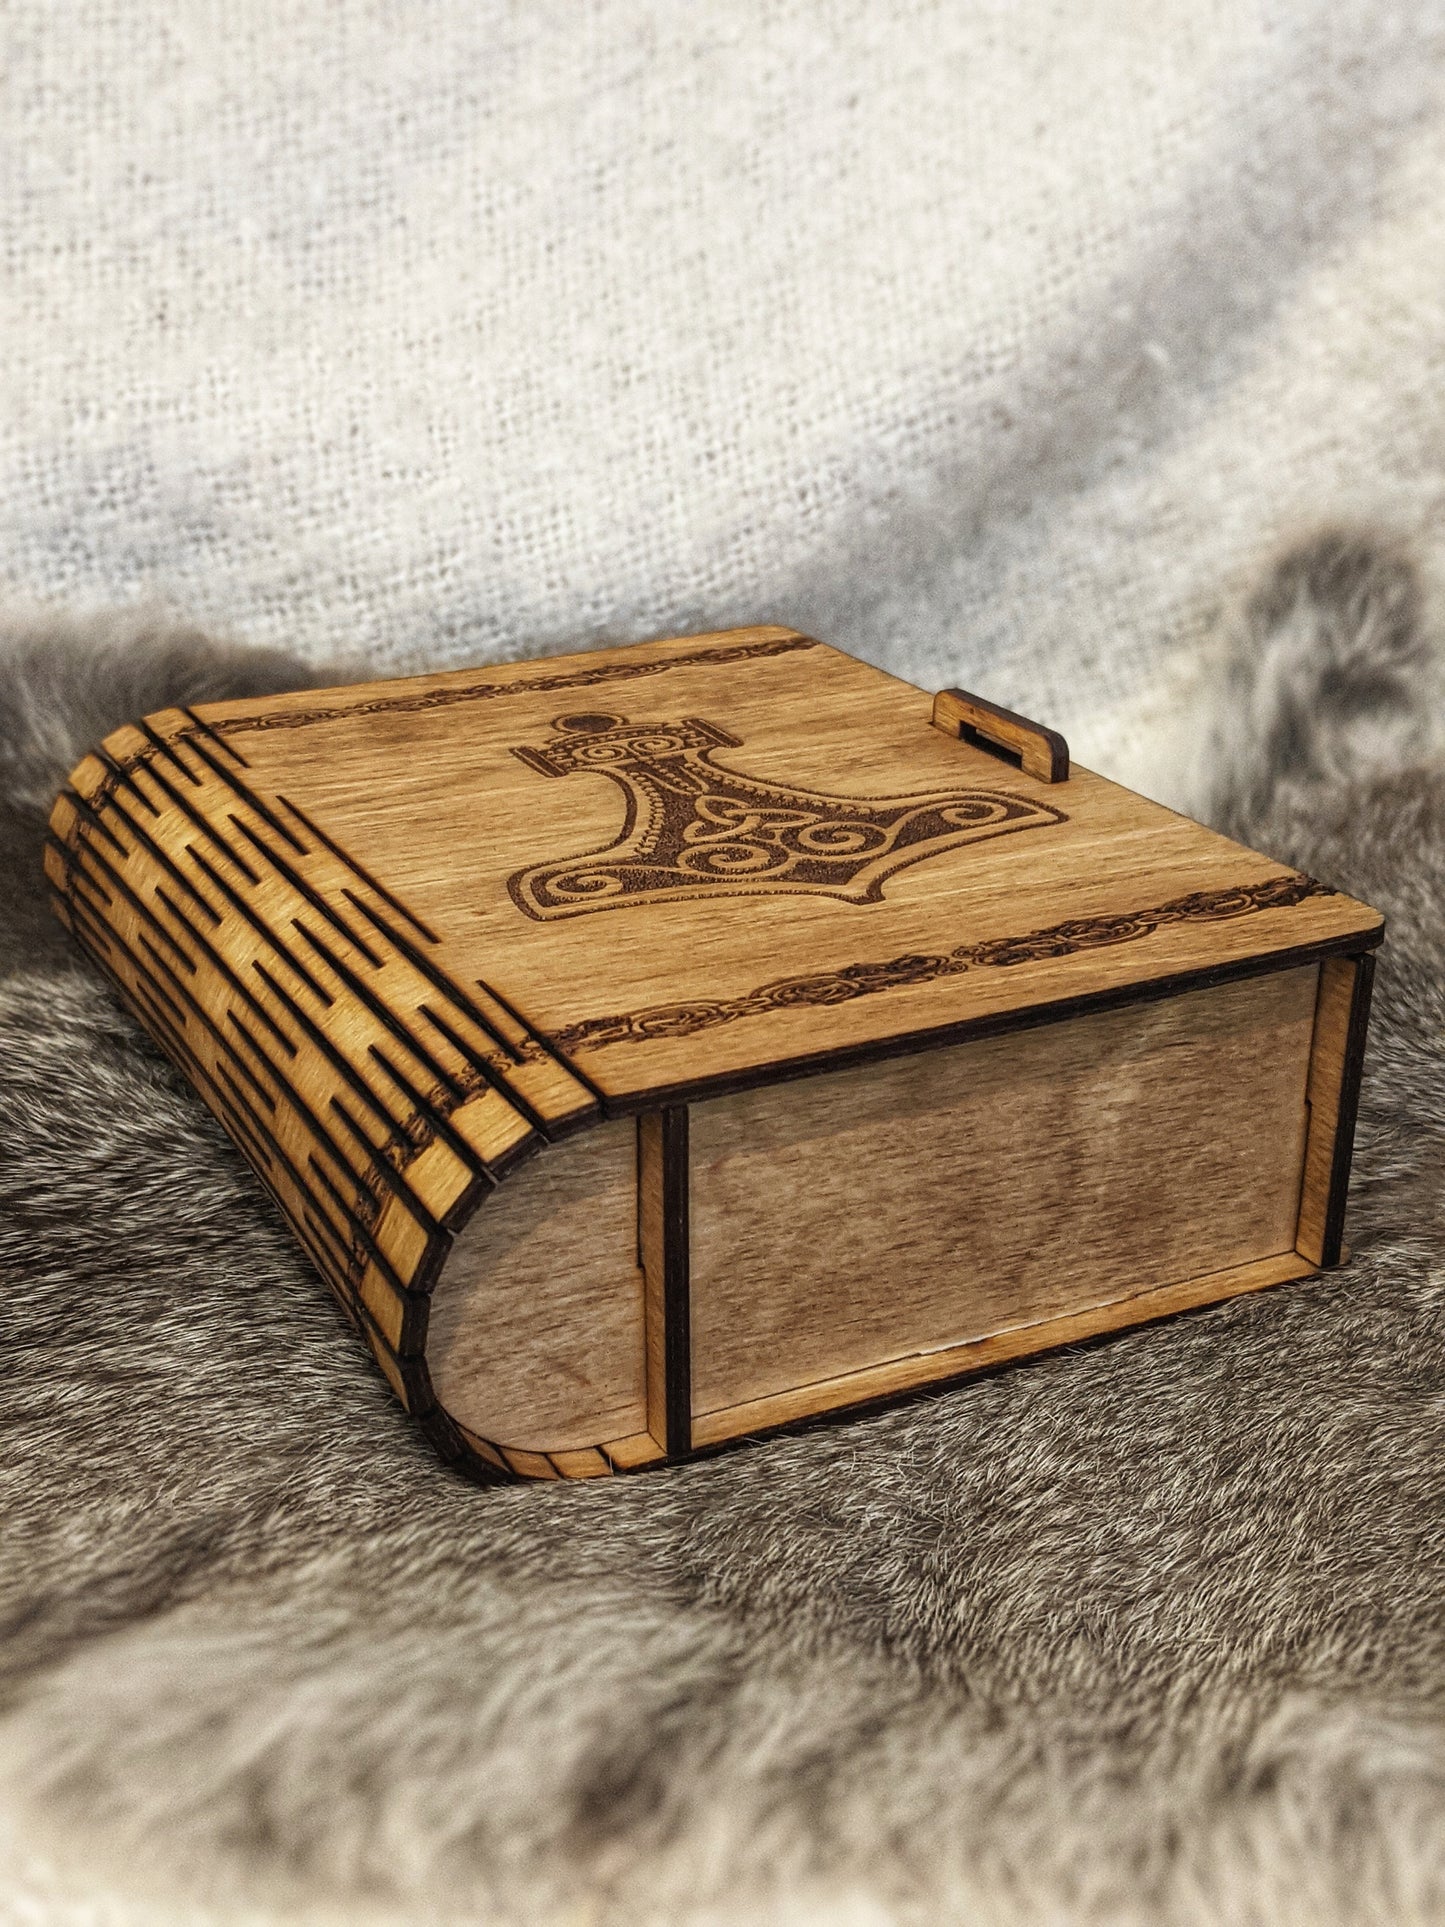 Mjolnir Altar Stash Box Wooden Book Living Edge Locking Heathen Asatru Rune